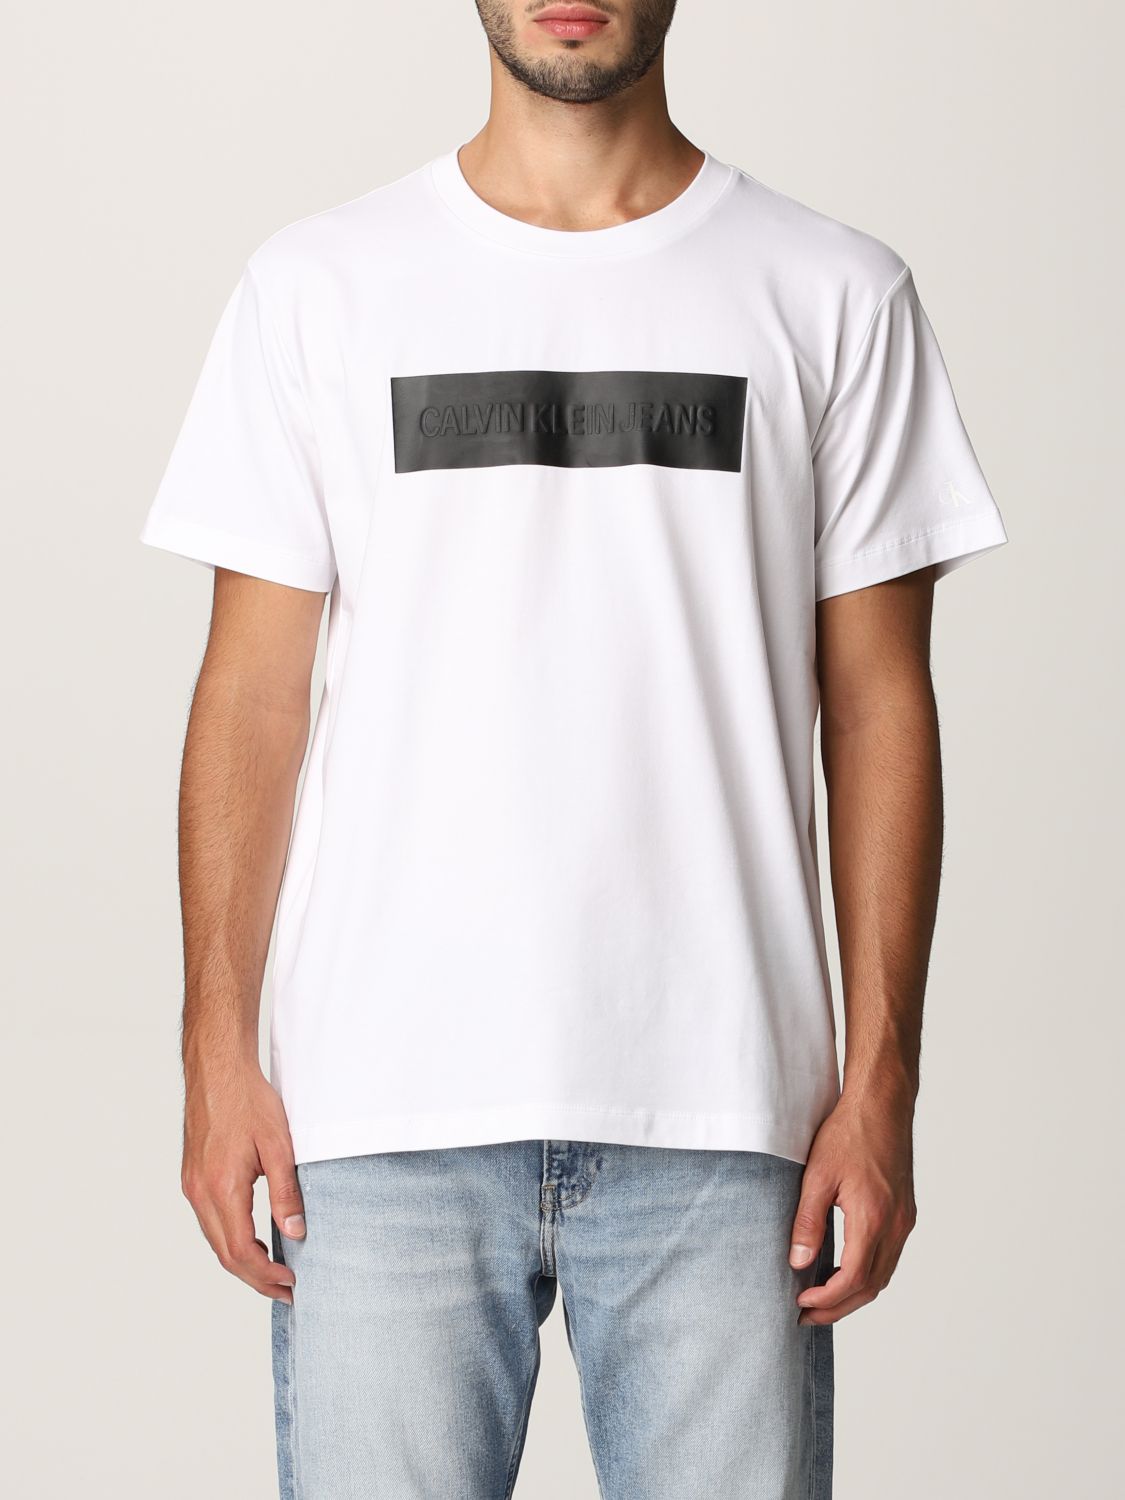 CALVIN KLEIN JEANS: t-shirt White Jeans J30J318453 for online man Calvin at Klein t-shirt - 